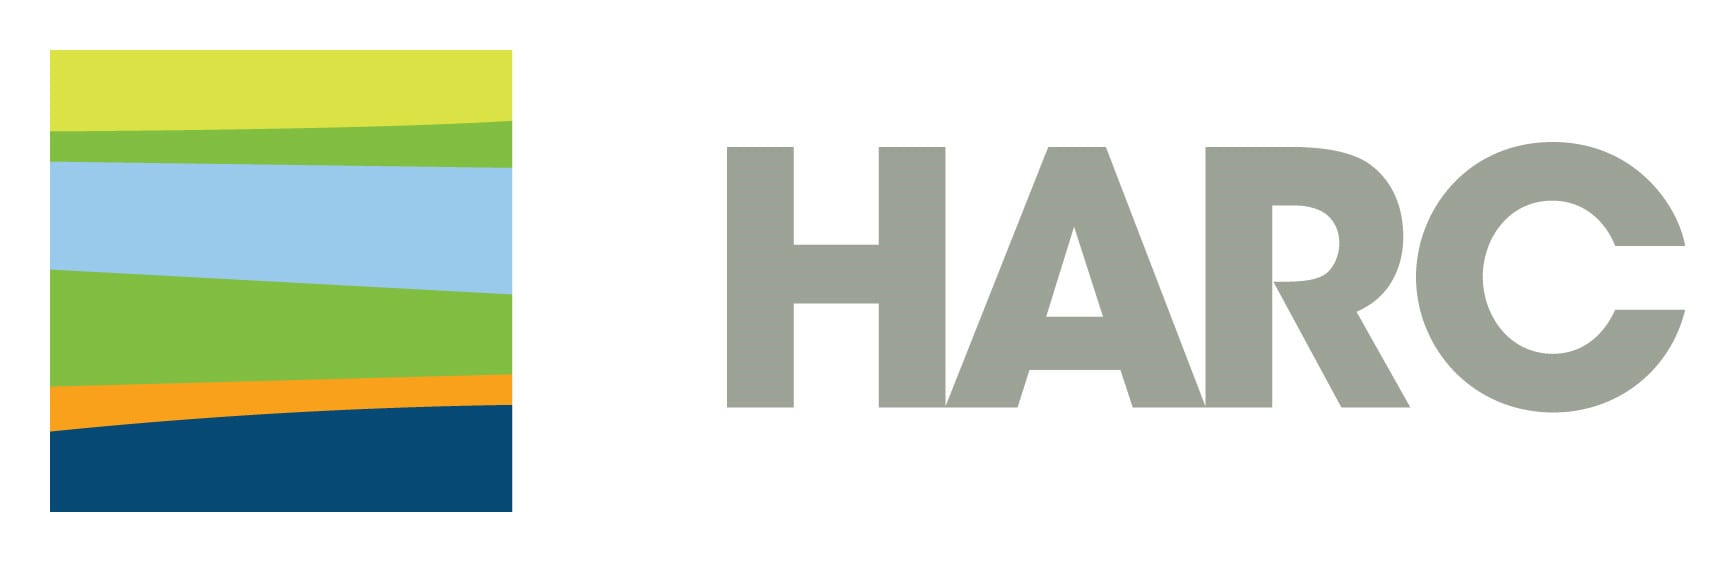 HARC logo